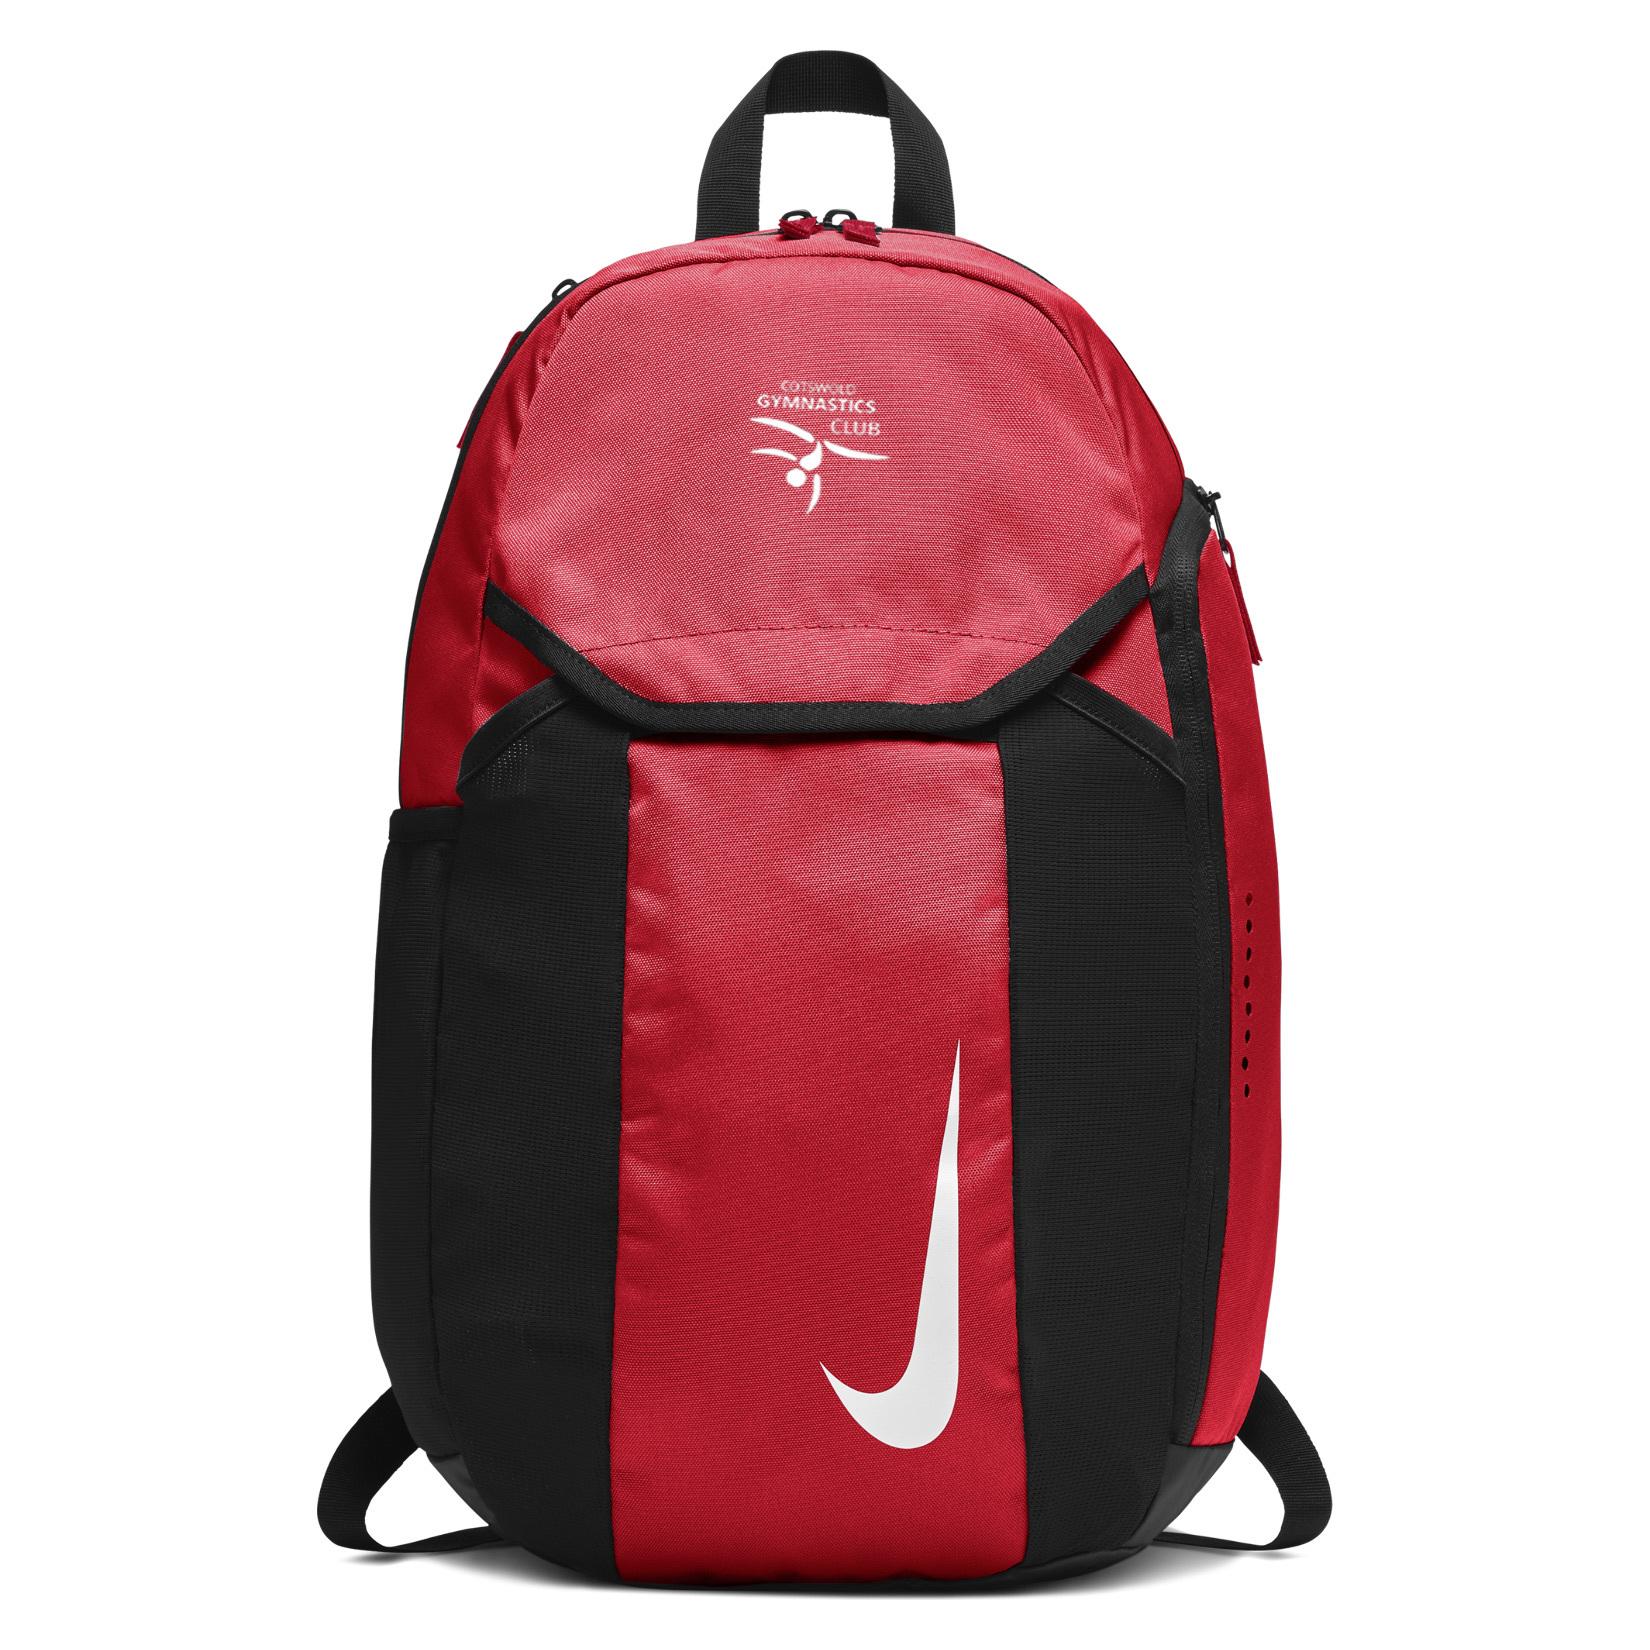 Nike Academy Team Backpack University Red-Black-White